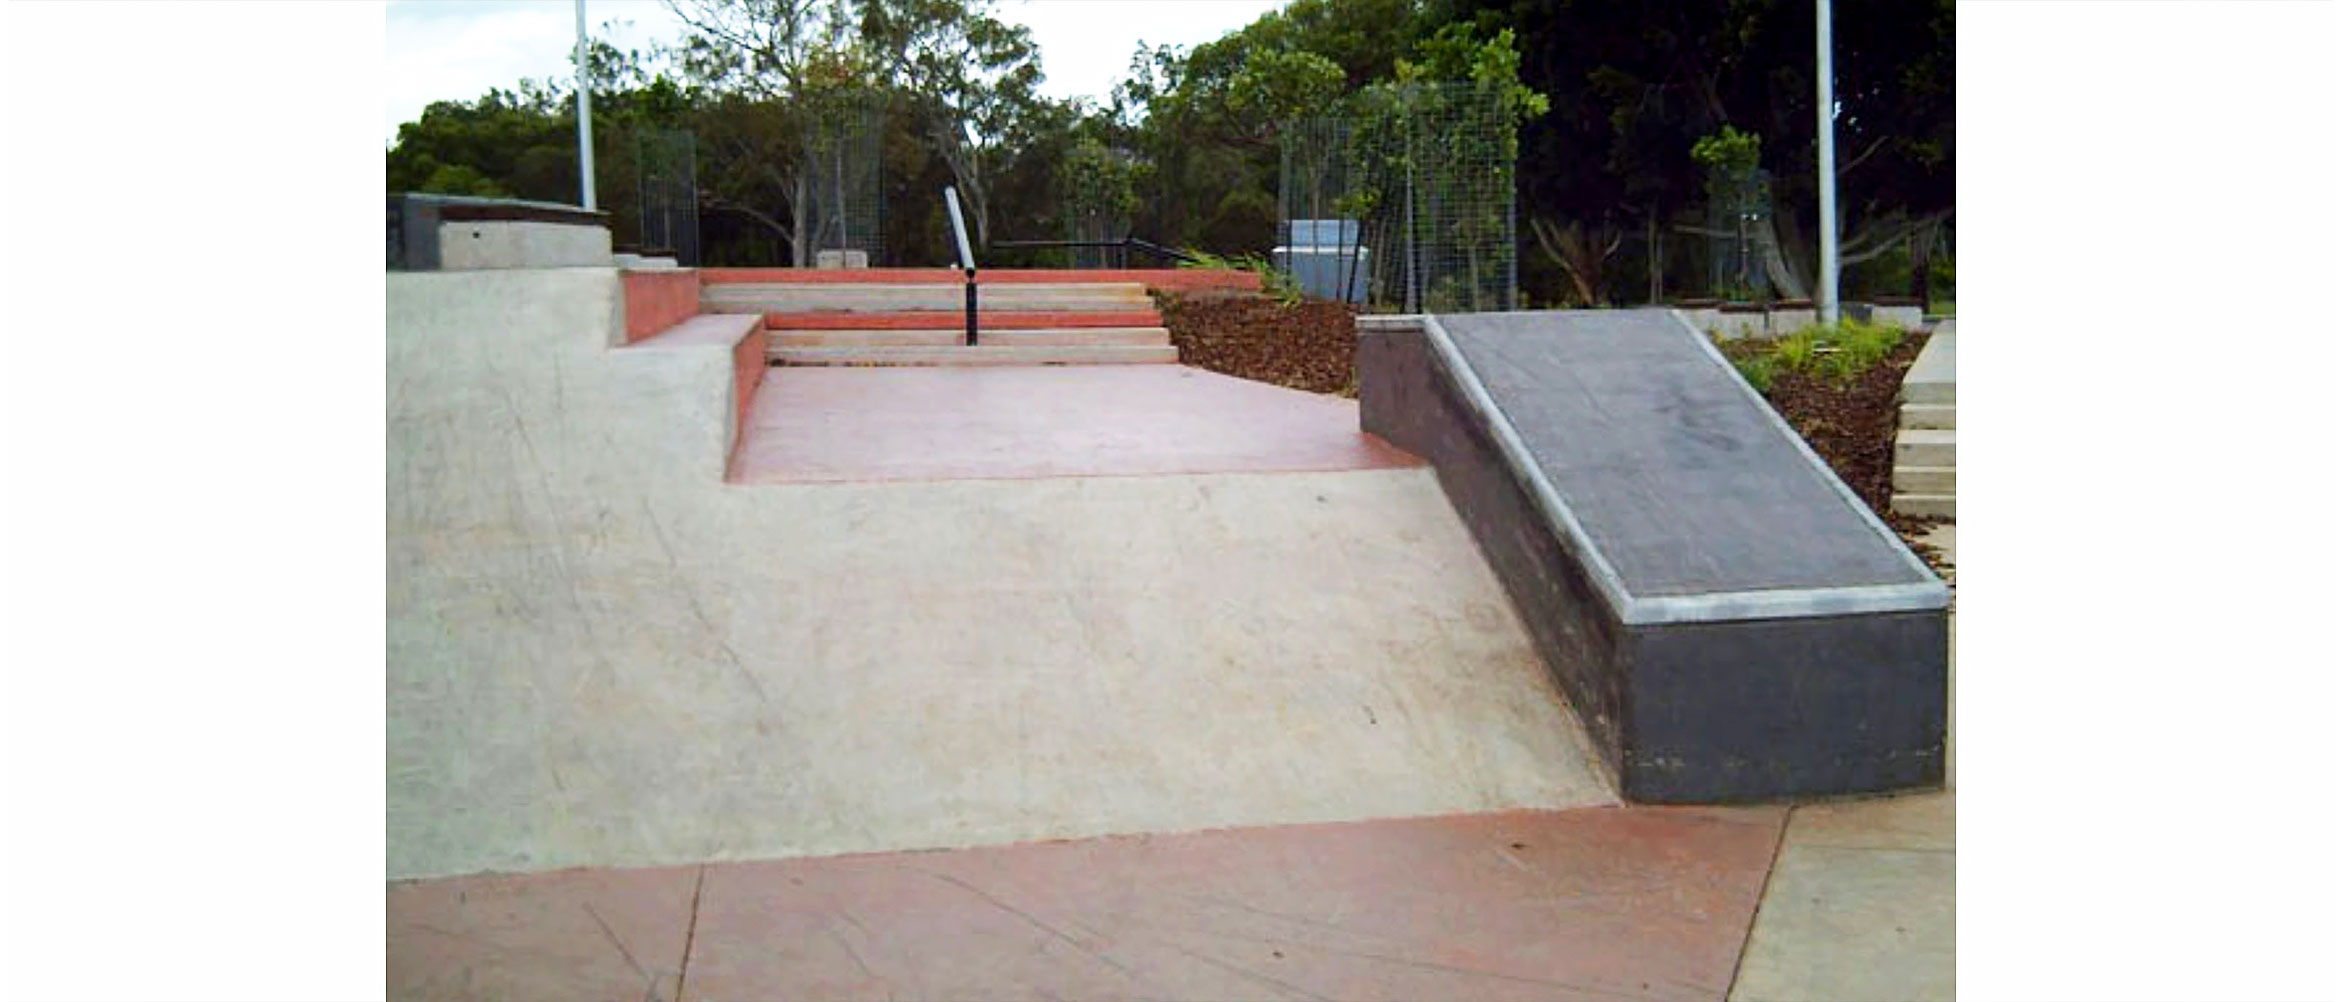 Capalaba skate park street section, Concrete Skateparks build